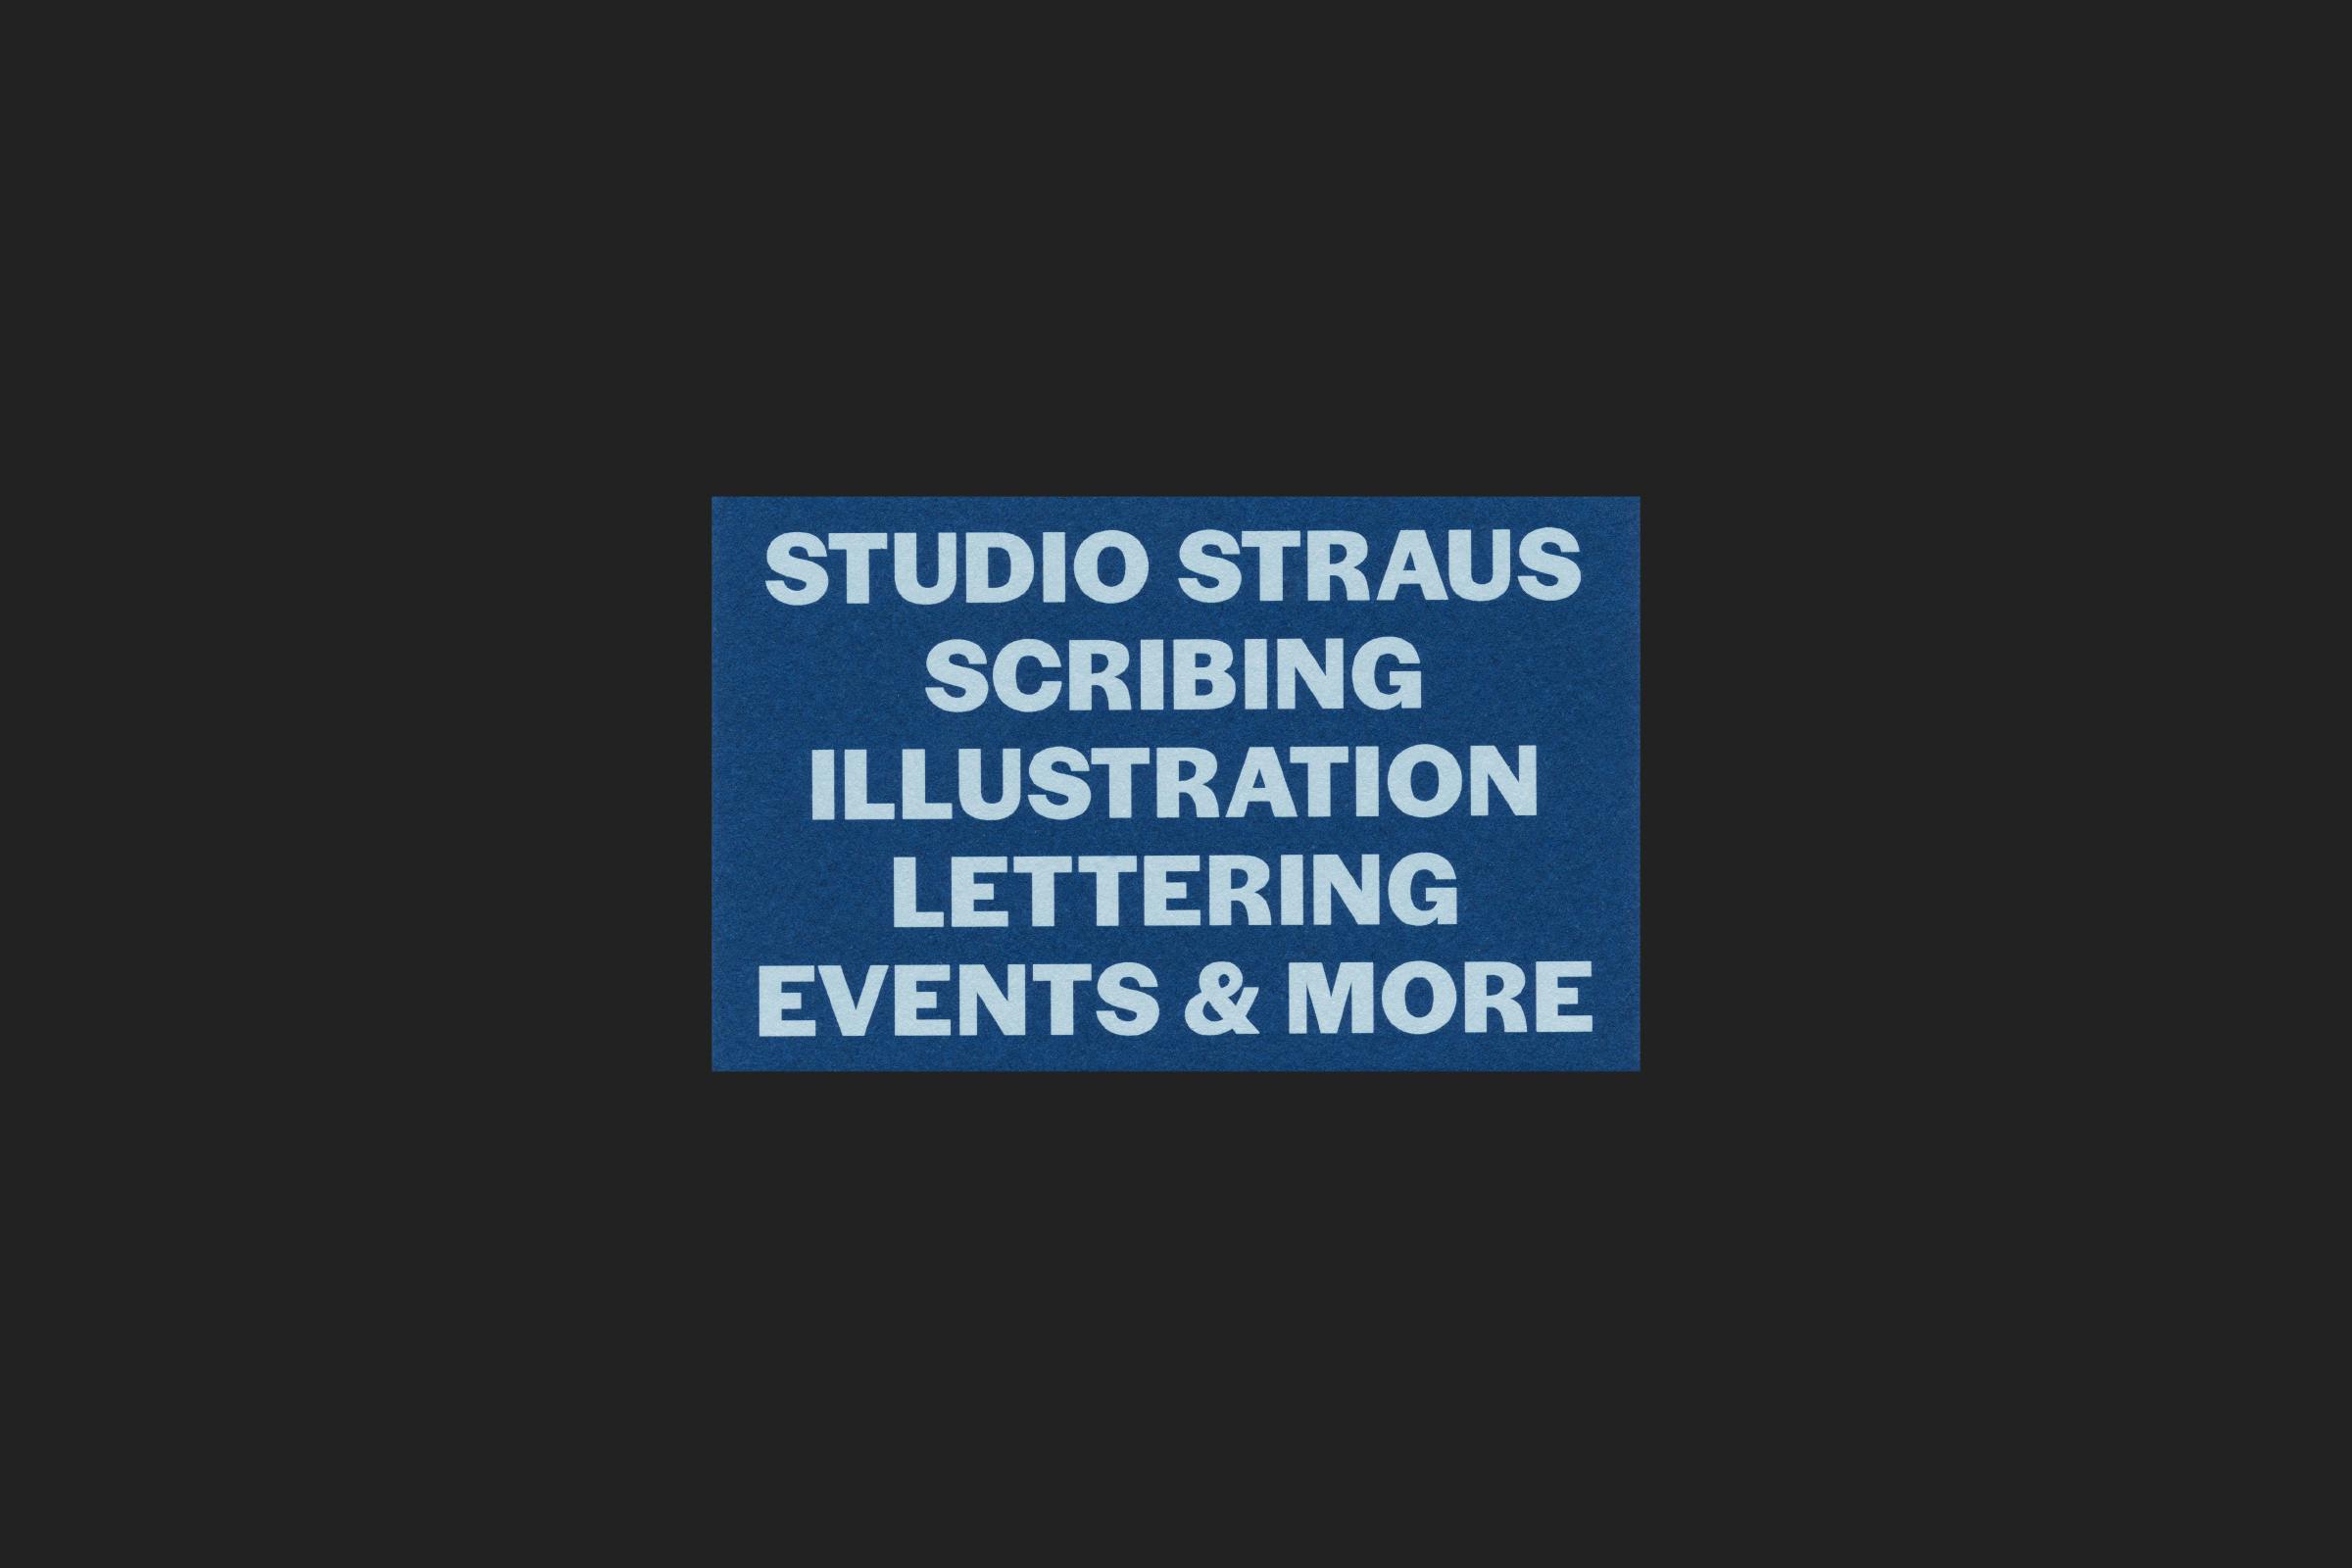 Studio Straus, Identity, Design by Wolfe Hall